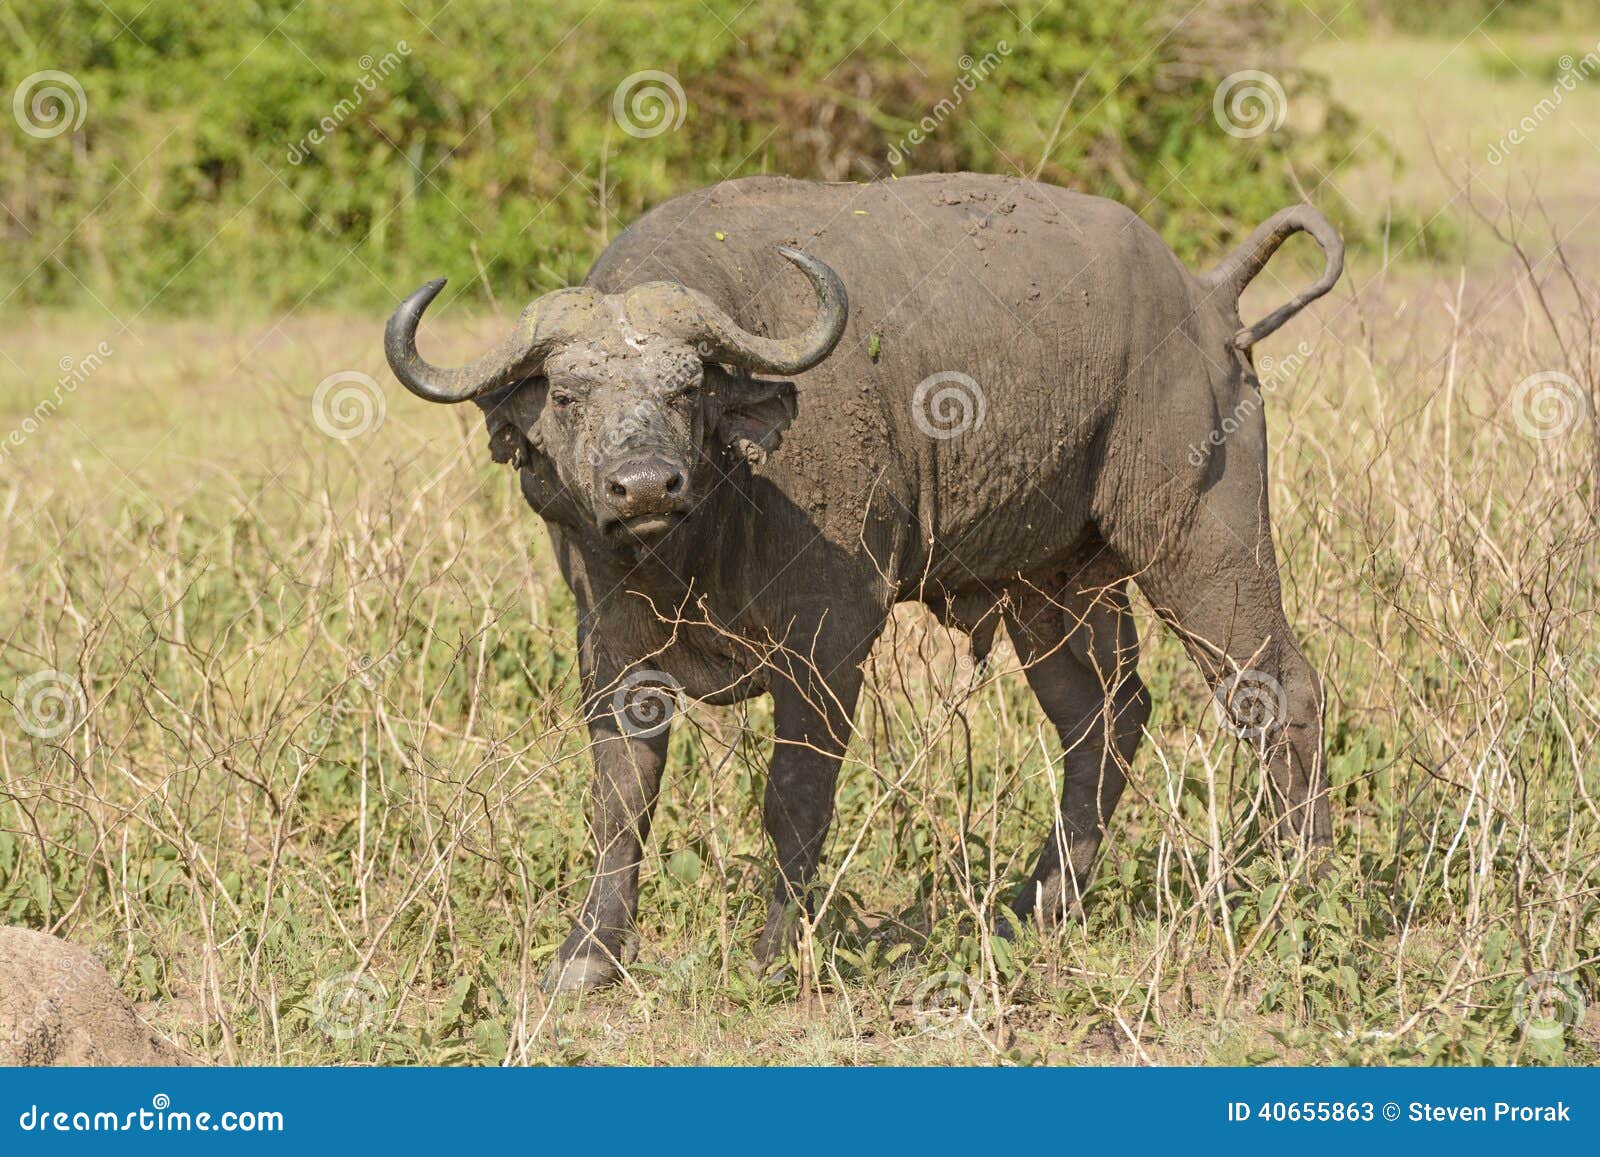 cape buffalo in the veldt